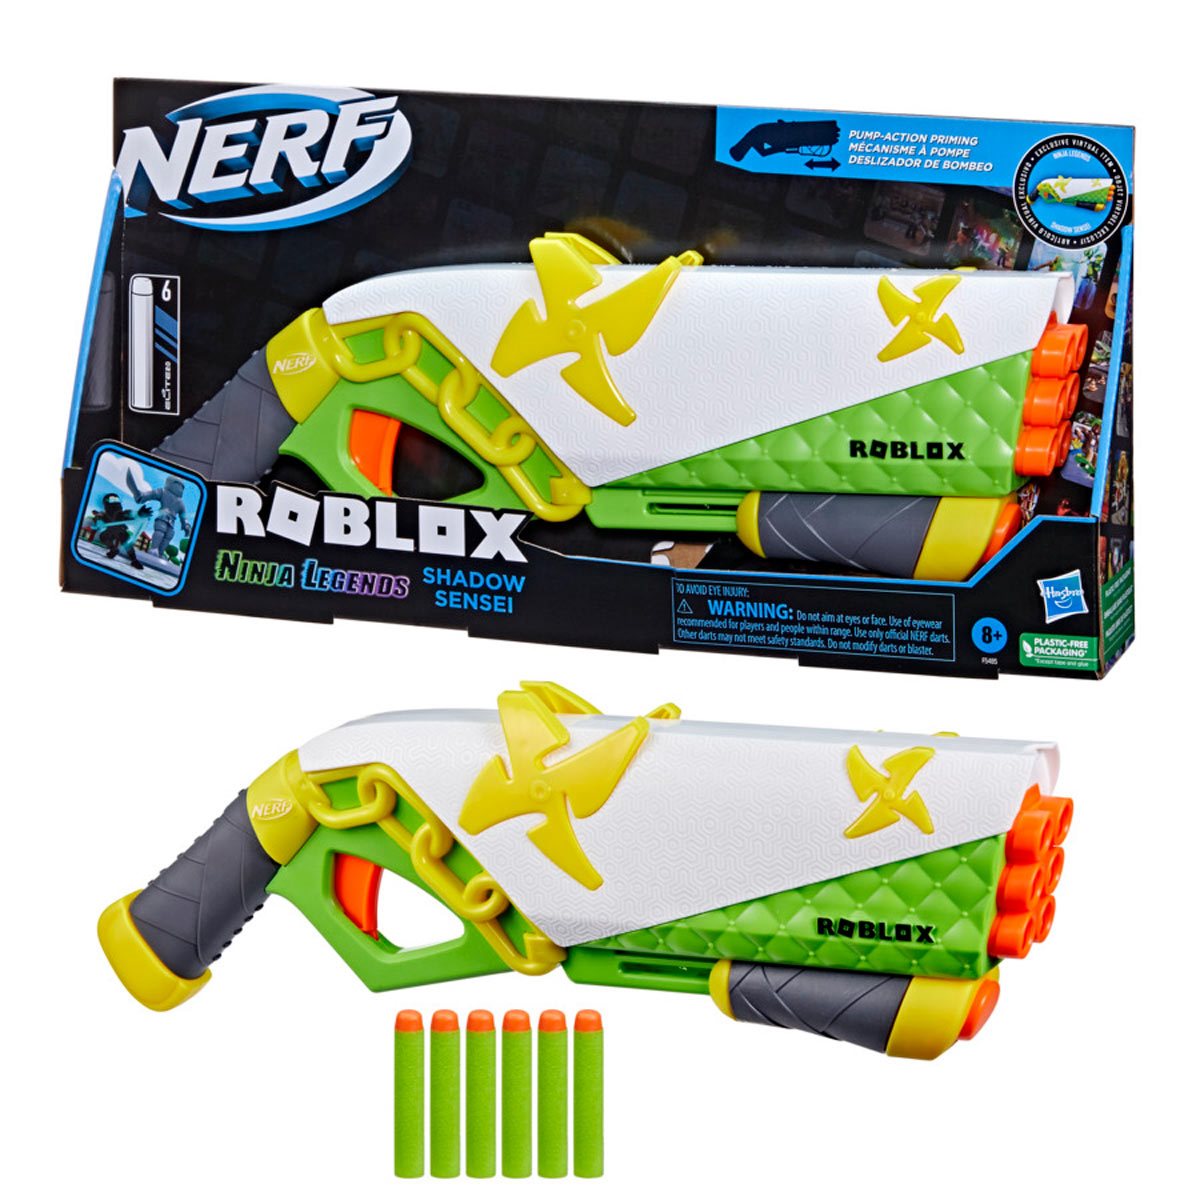 Roblox Foam Dart Blaster - Kids Outdoor Play  